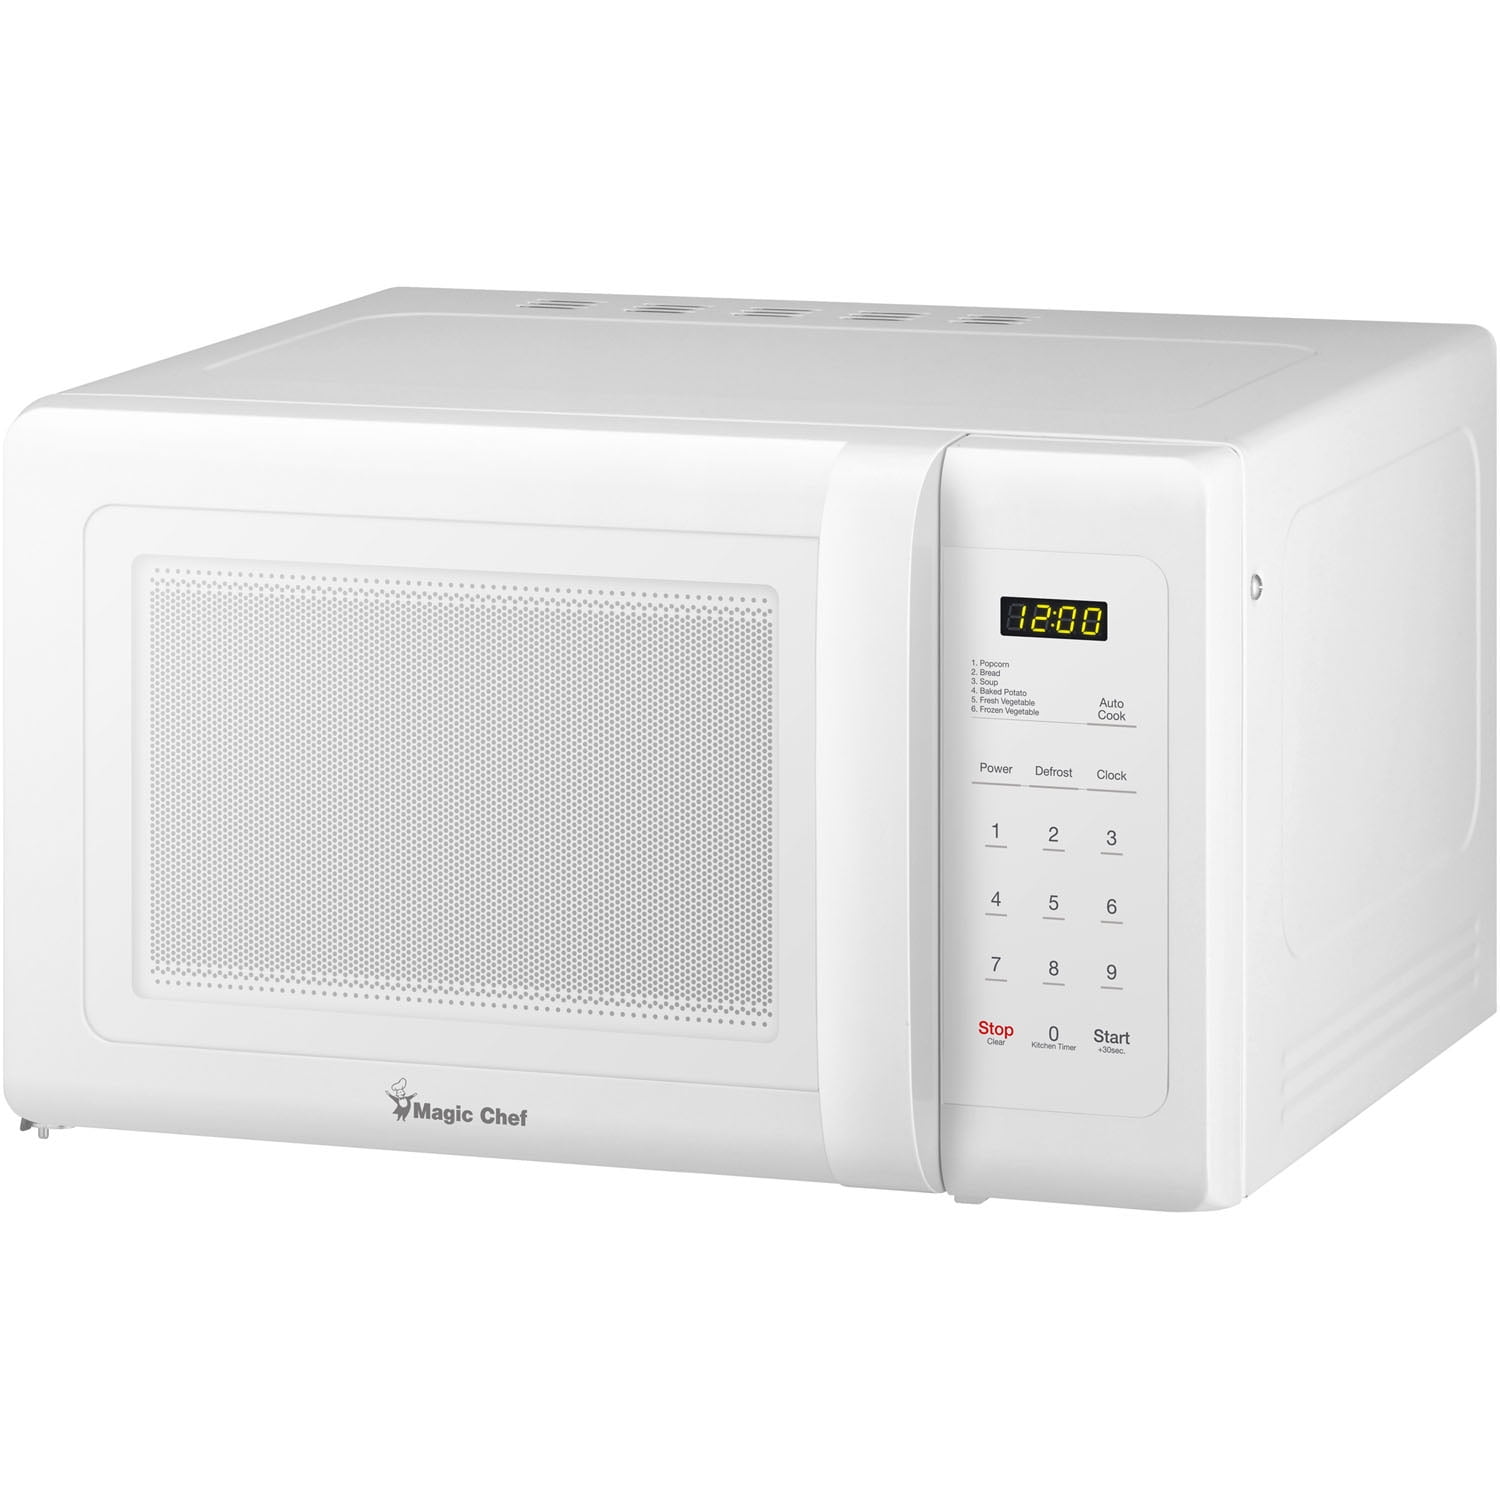 Details about   Black and Decker 900 Watt 0.9 Cubic Feet Counter Microwave Oven Open Box 